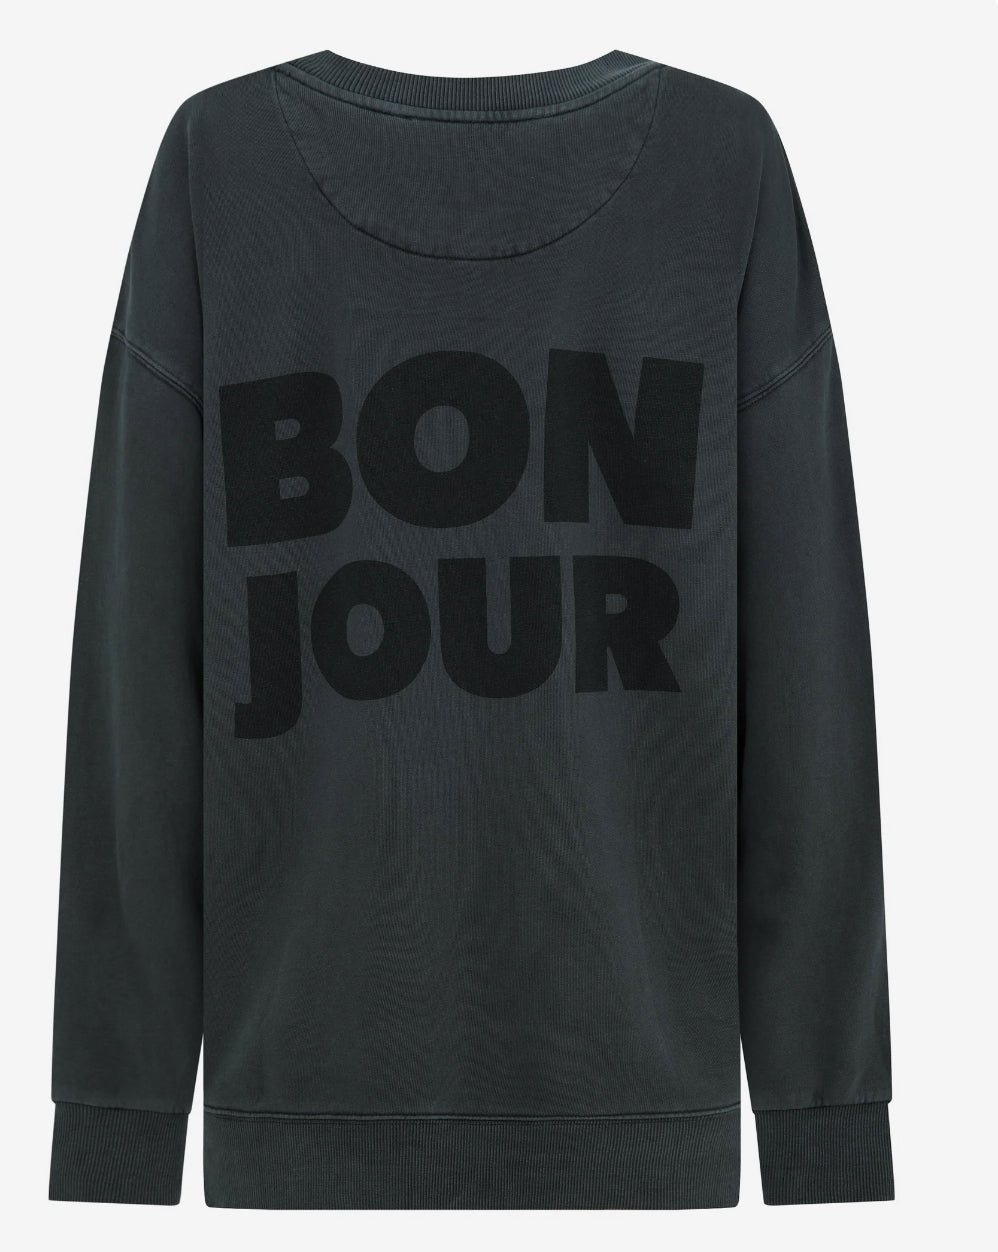 Bonjour Sweatshirt in Washed Black